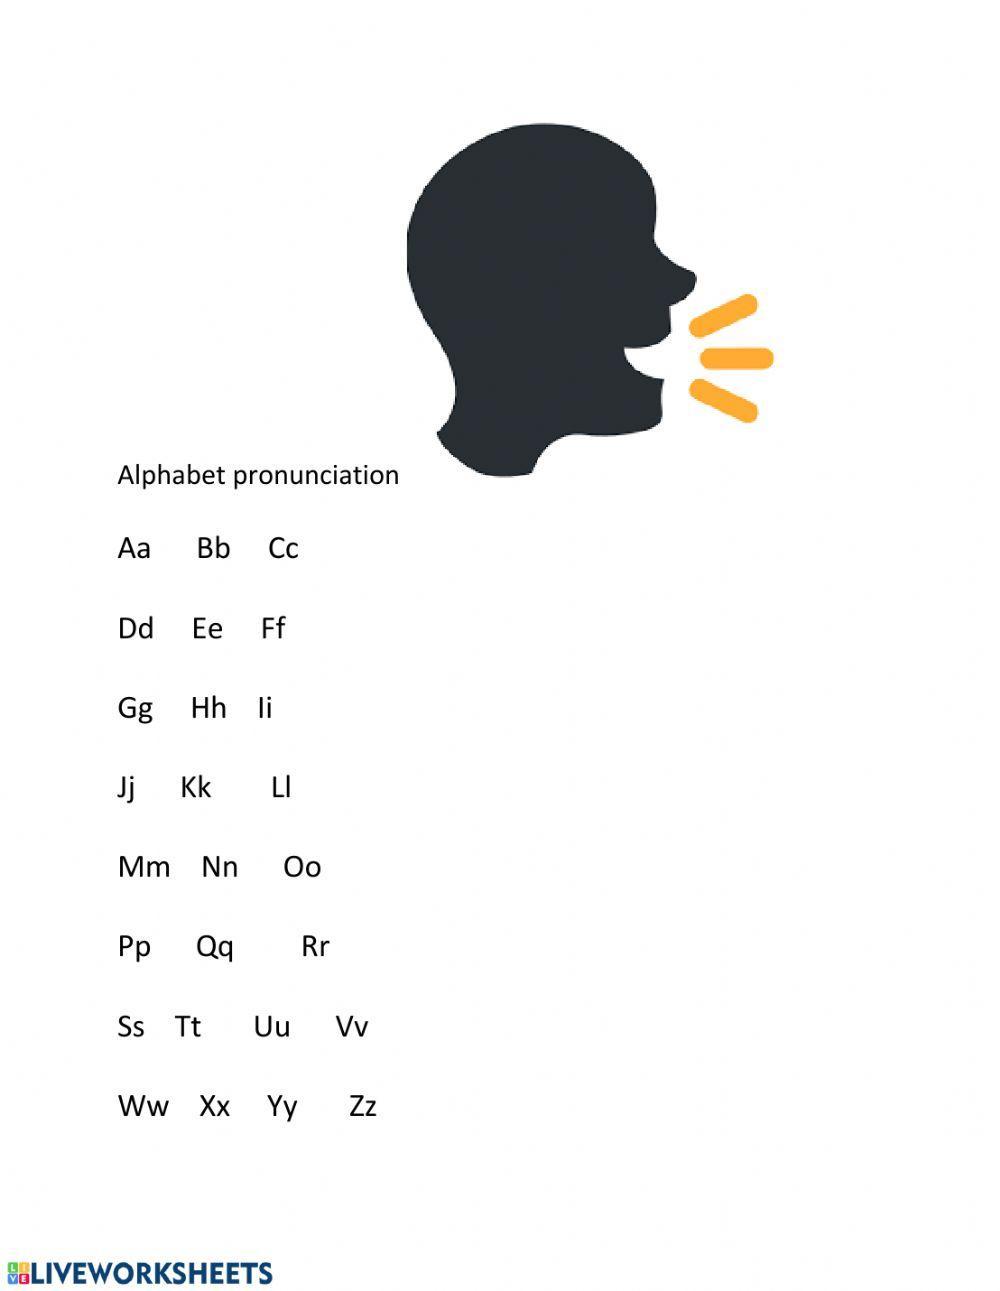 Alphabet pronunciation